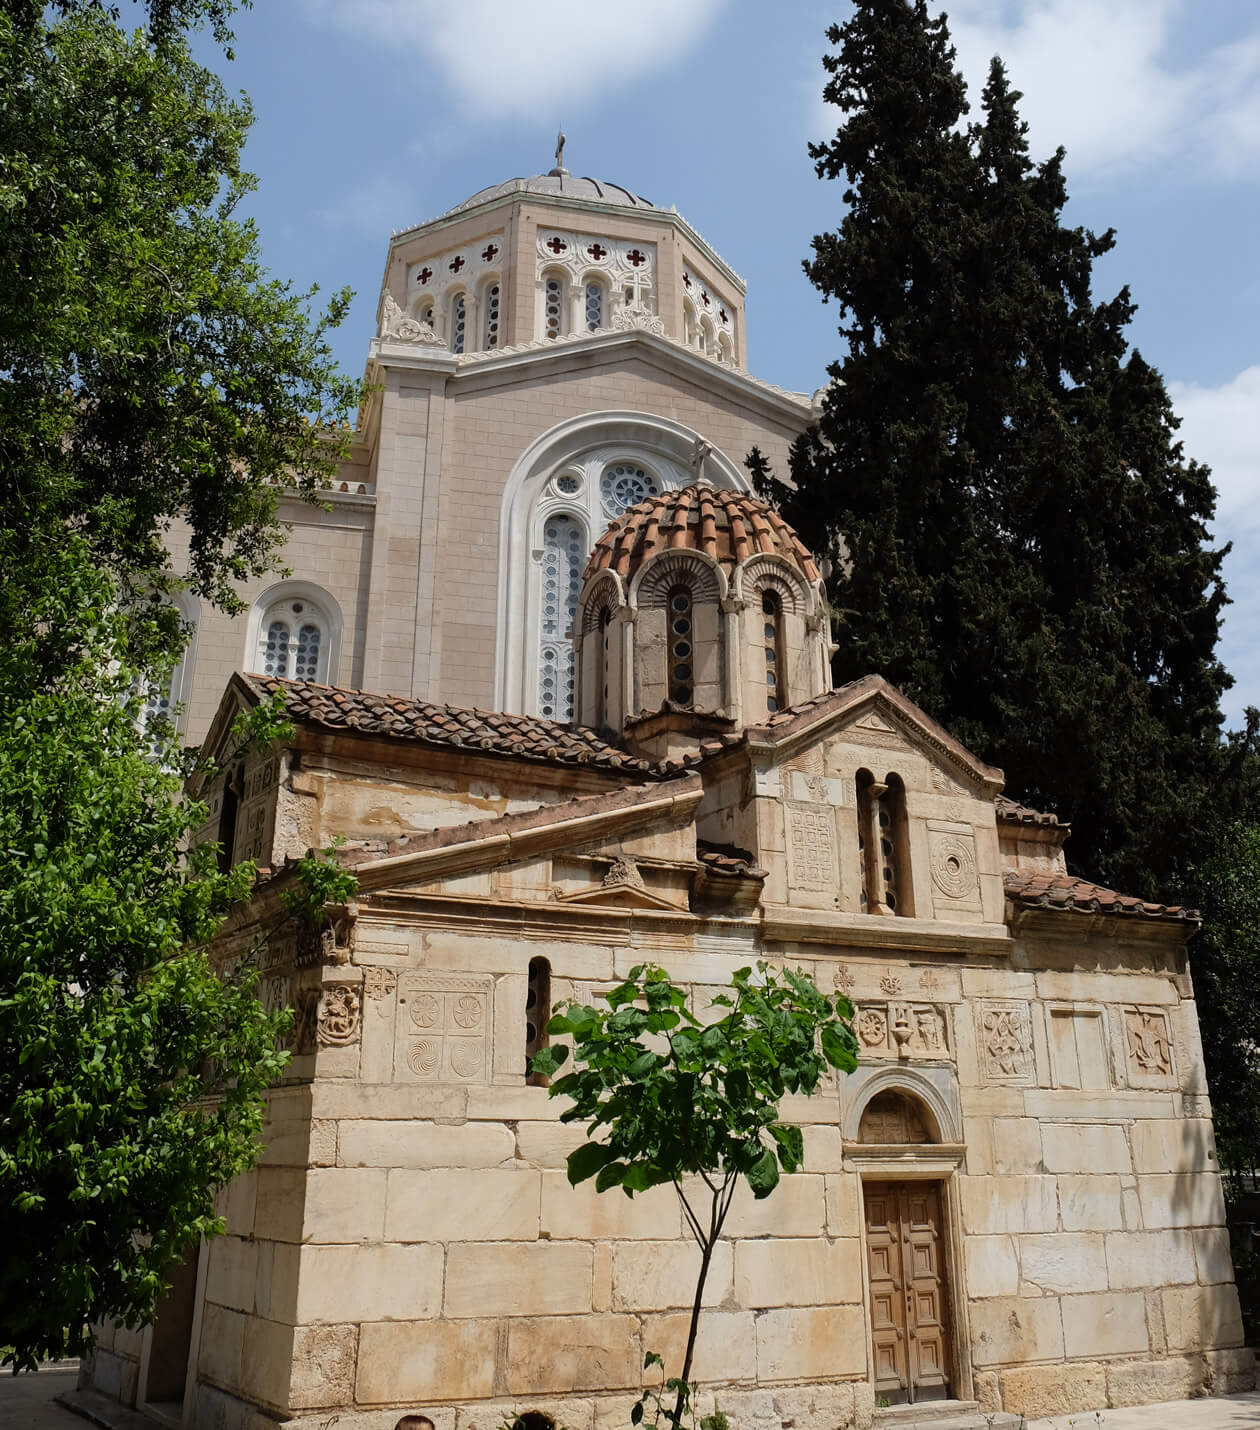 The tiny Agios Eleftherios church next to the Metropolitan cathedral